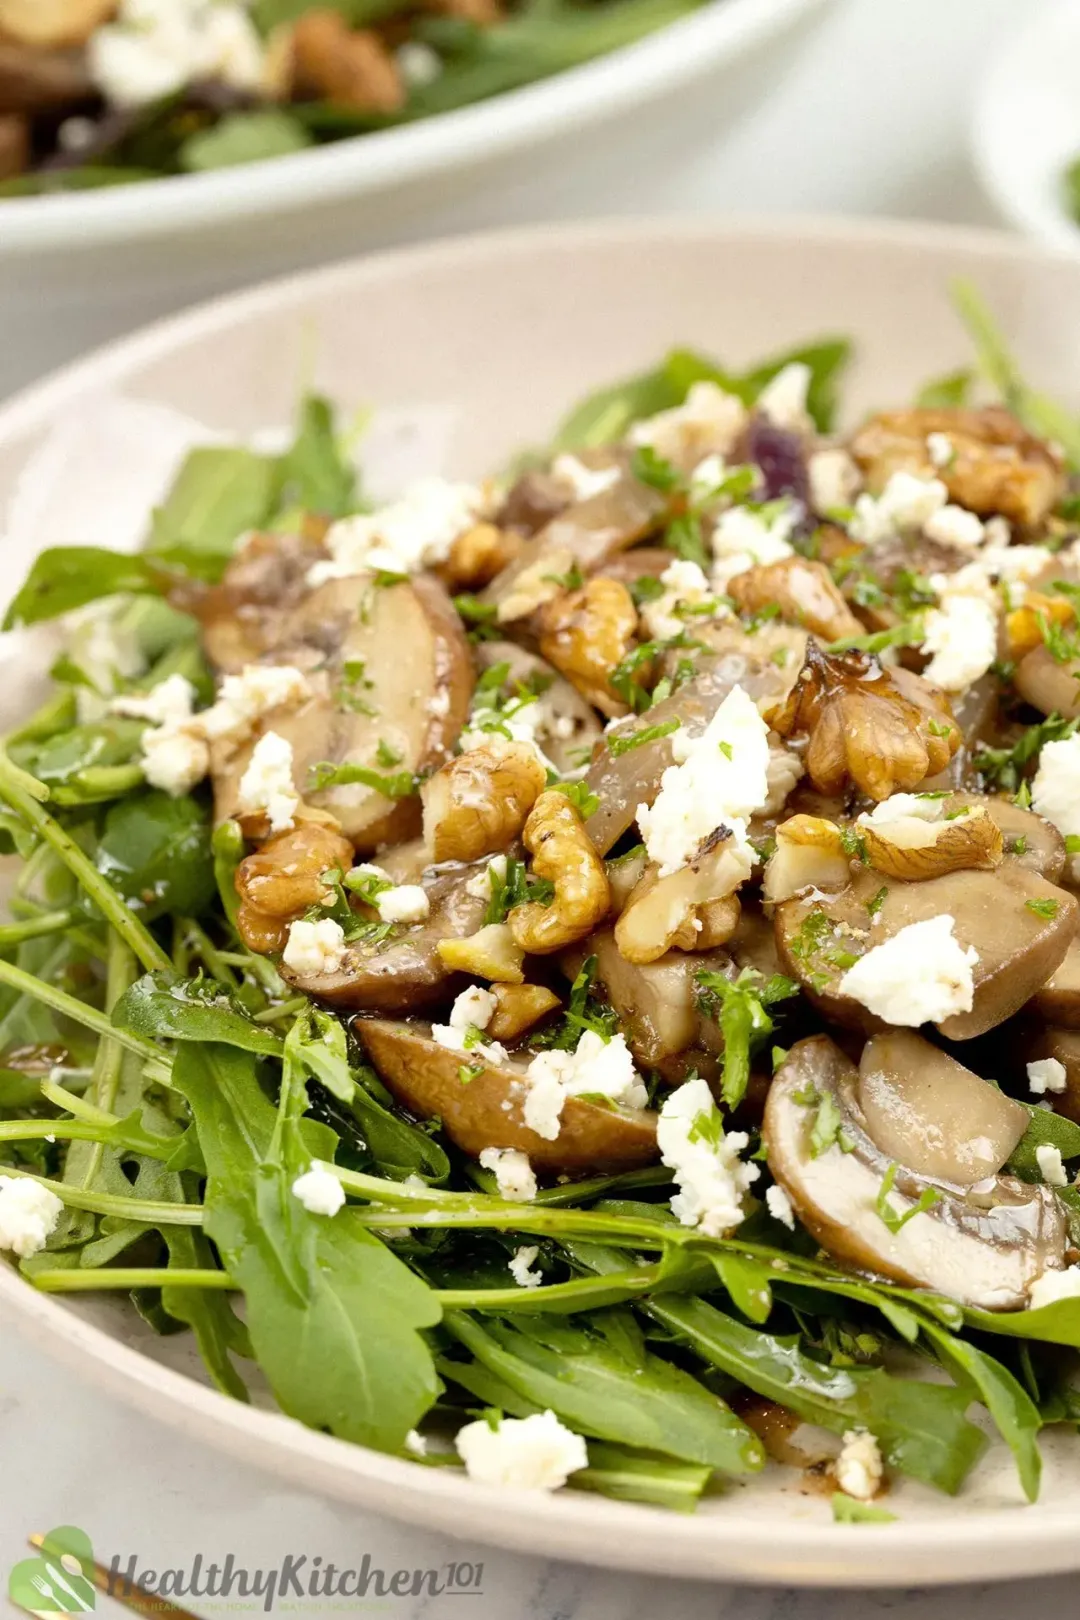 A plate of homemade mushroom salad with sliced mushrooms, arugula, cheese, and walnuts